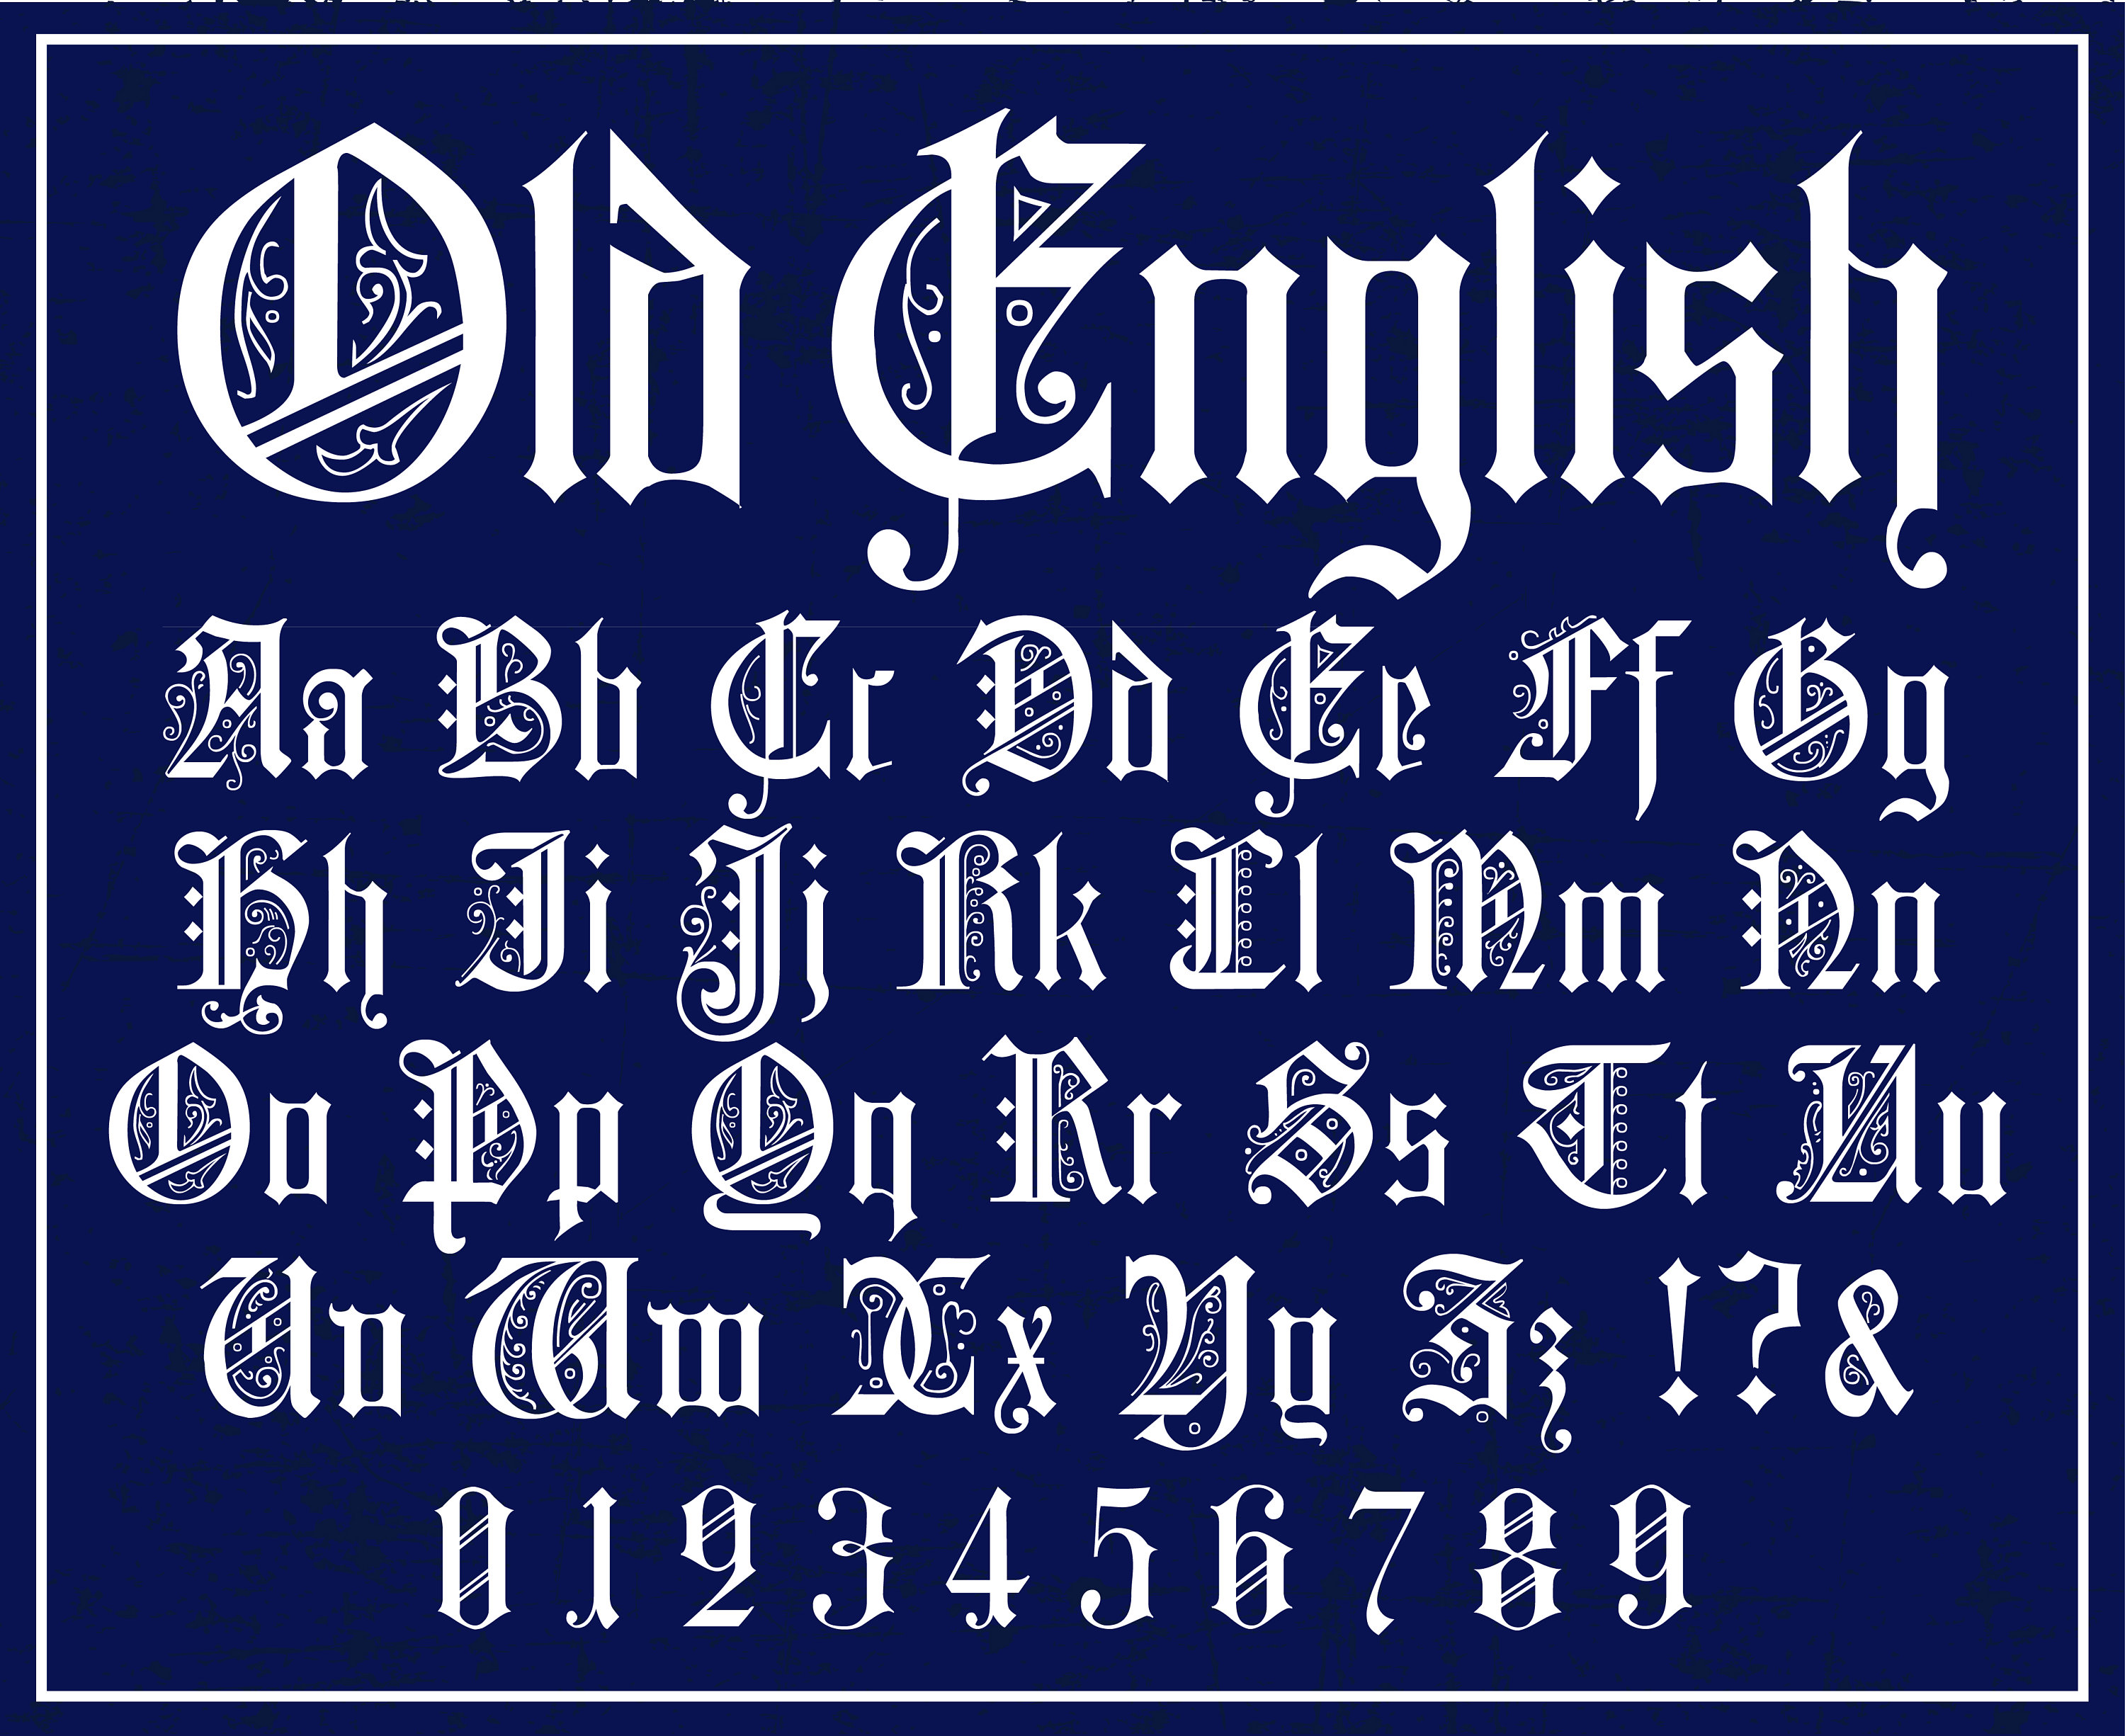 Old English Font Celtic Font Gaelic Font Old English Style Font Old English  Letters Old English Alphabet Old English Font Cricut